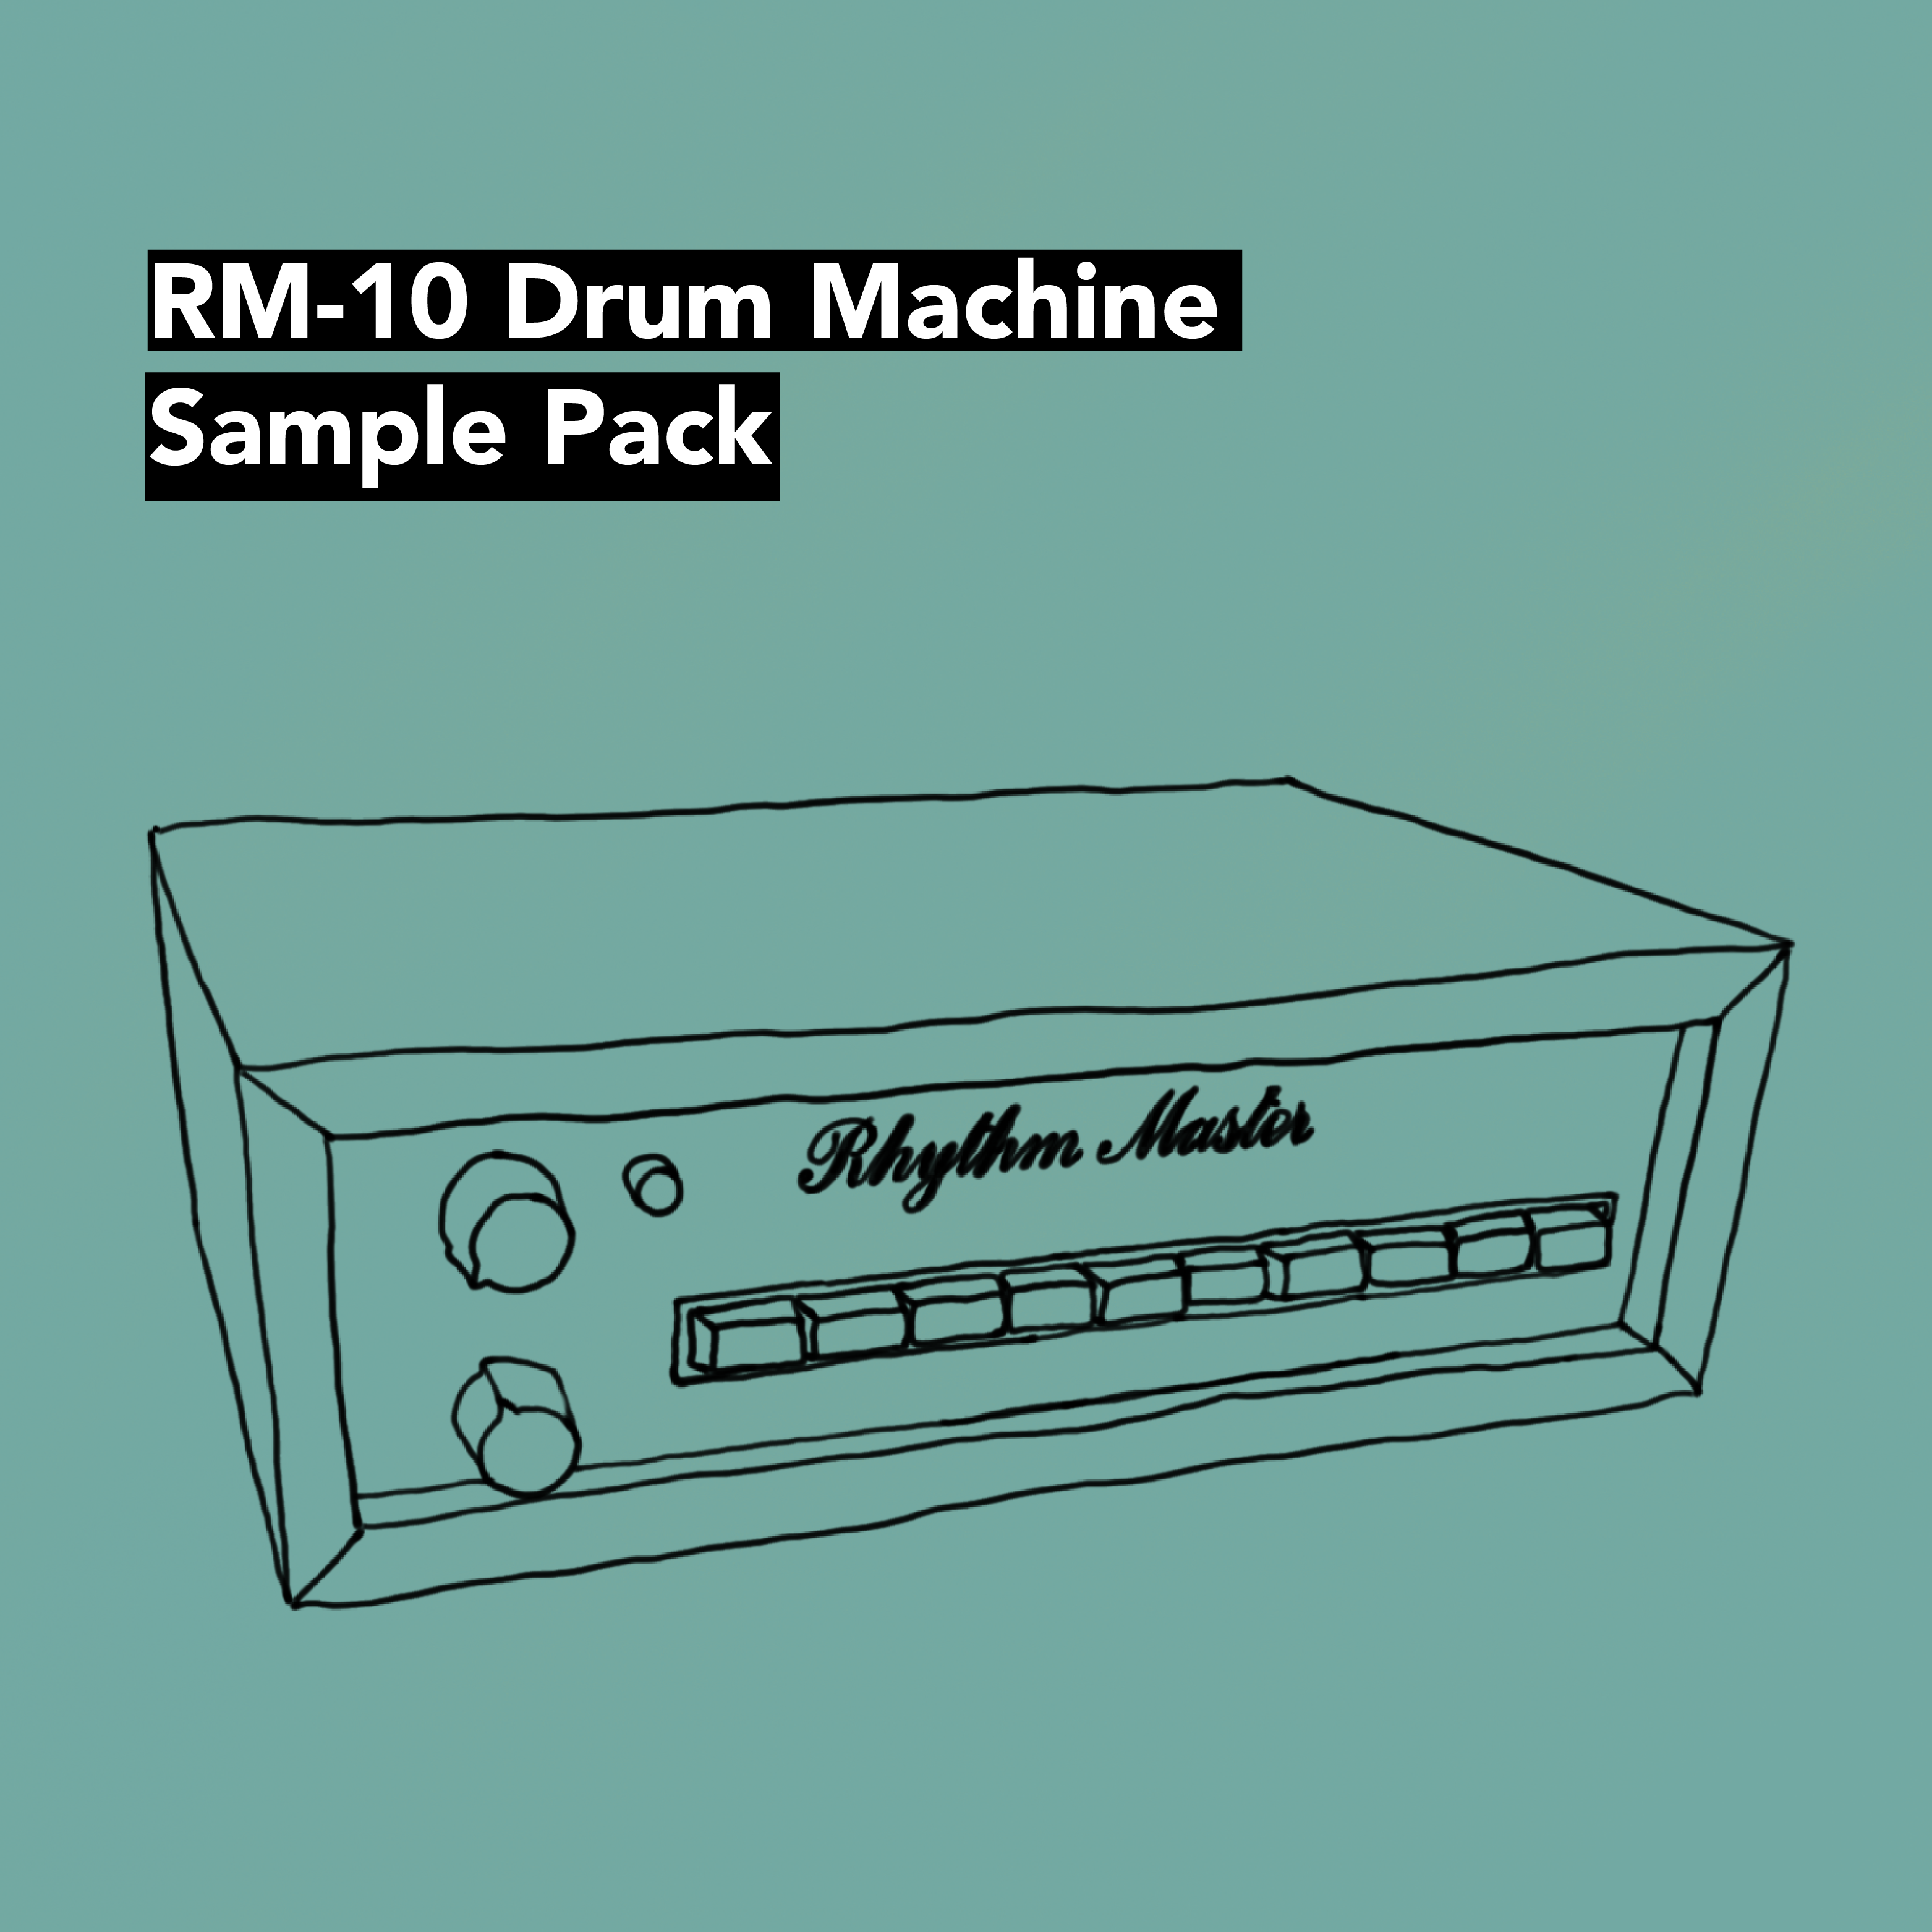 RM-10 Drum Machine Sample Pack